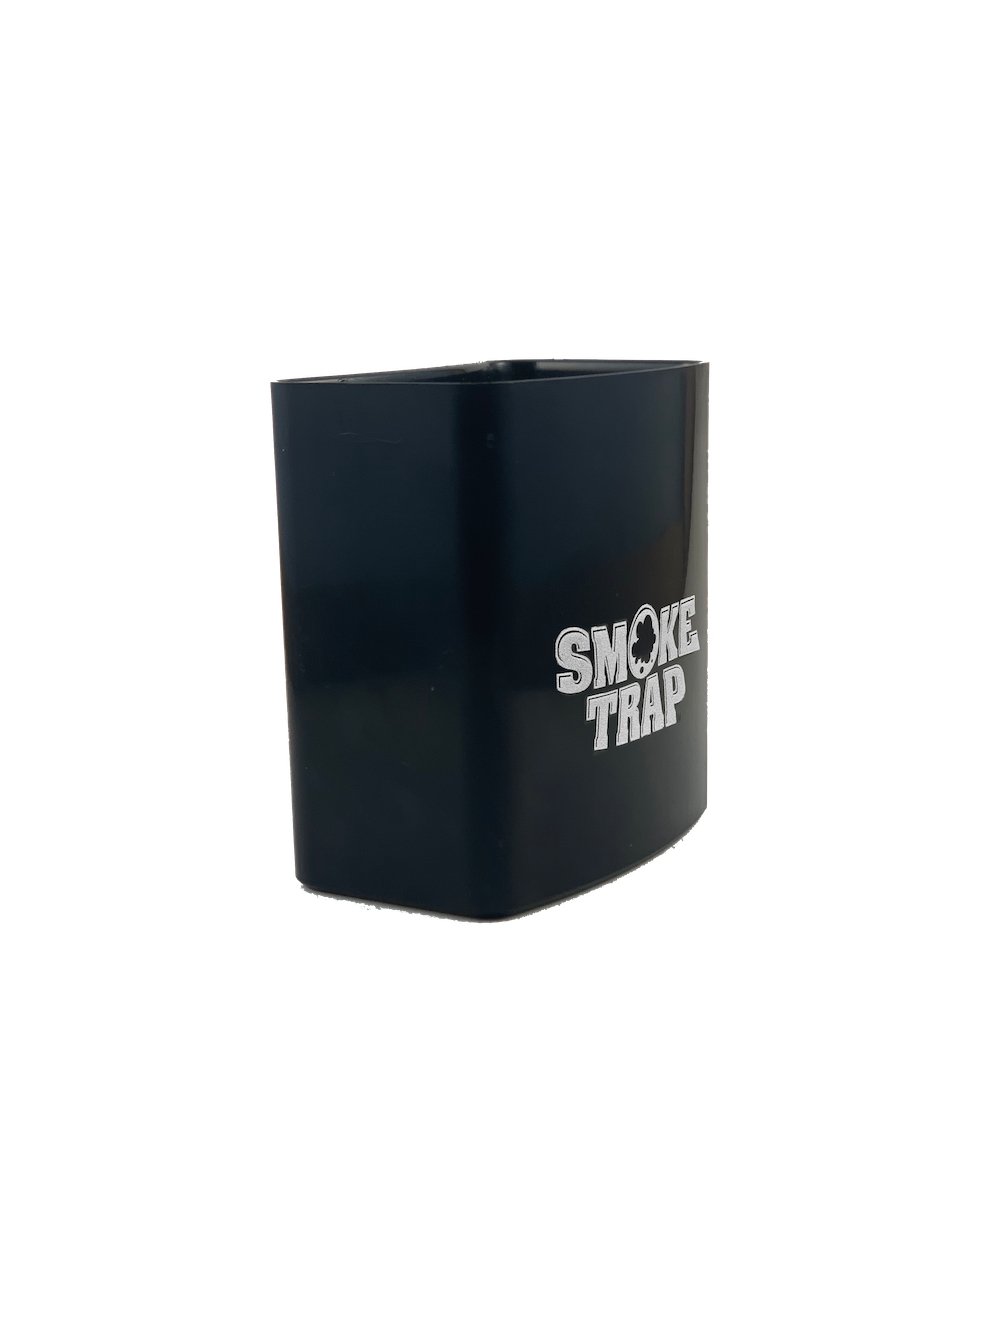 Smoke Trap + (sploof) 500+ Uses – Zmokefest